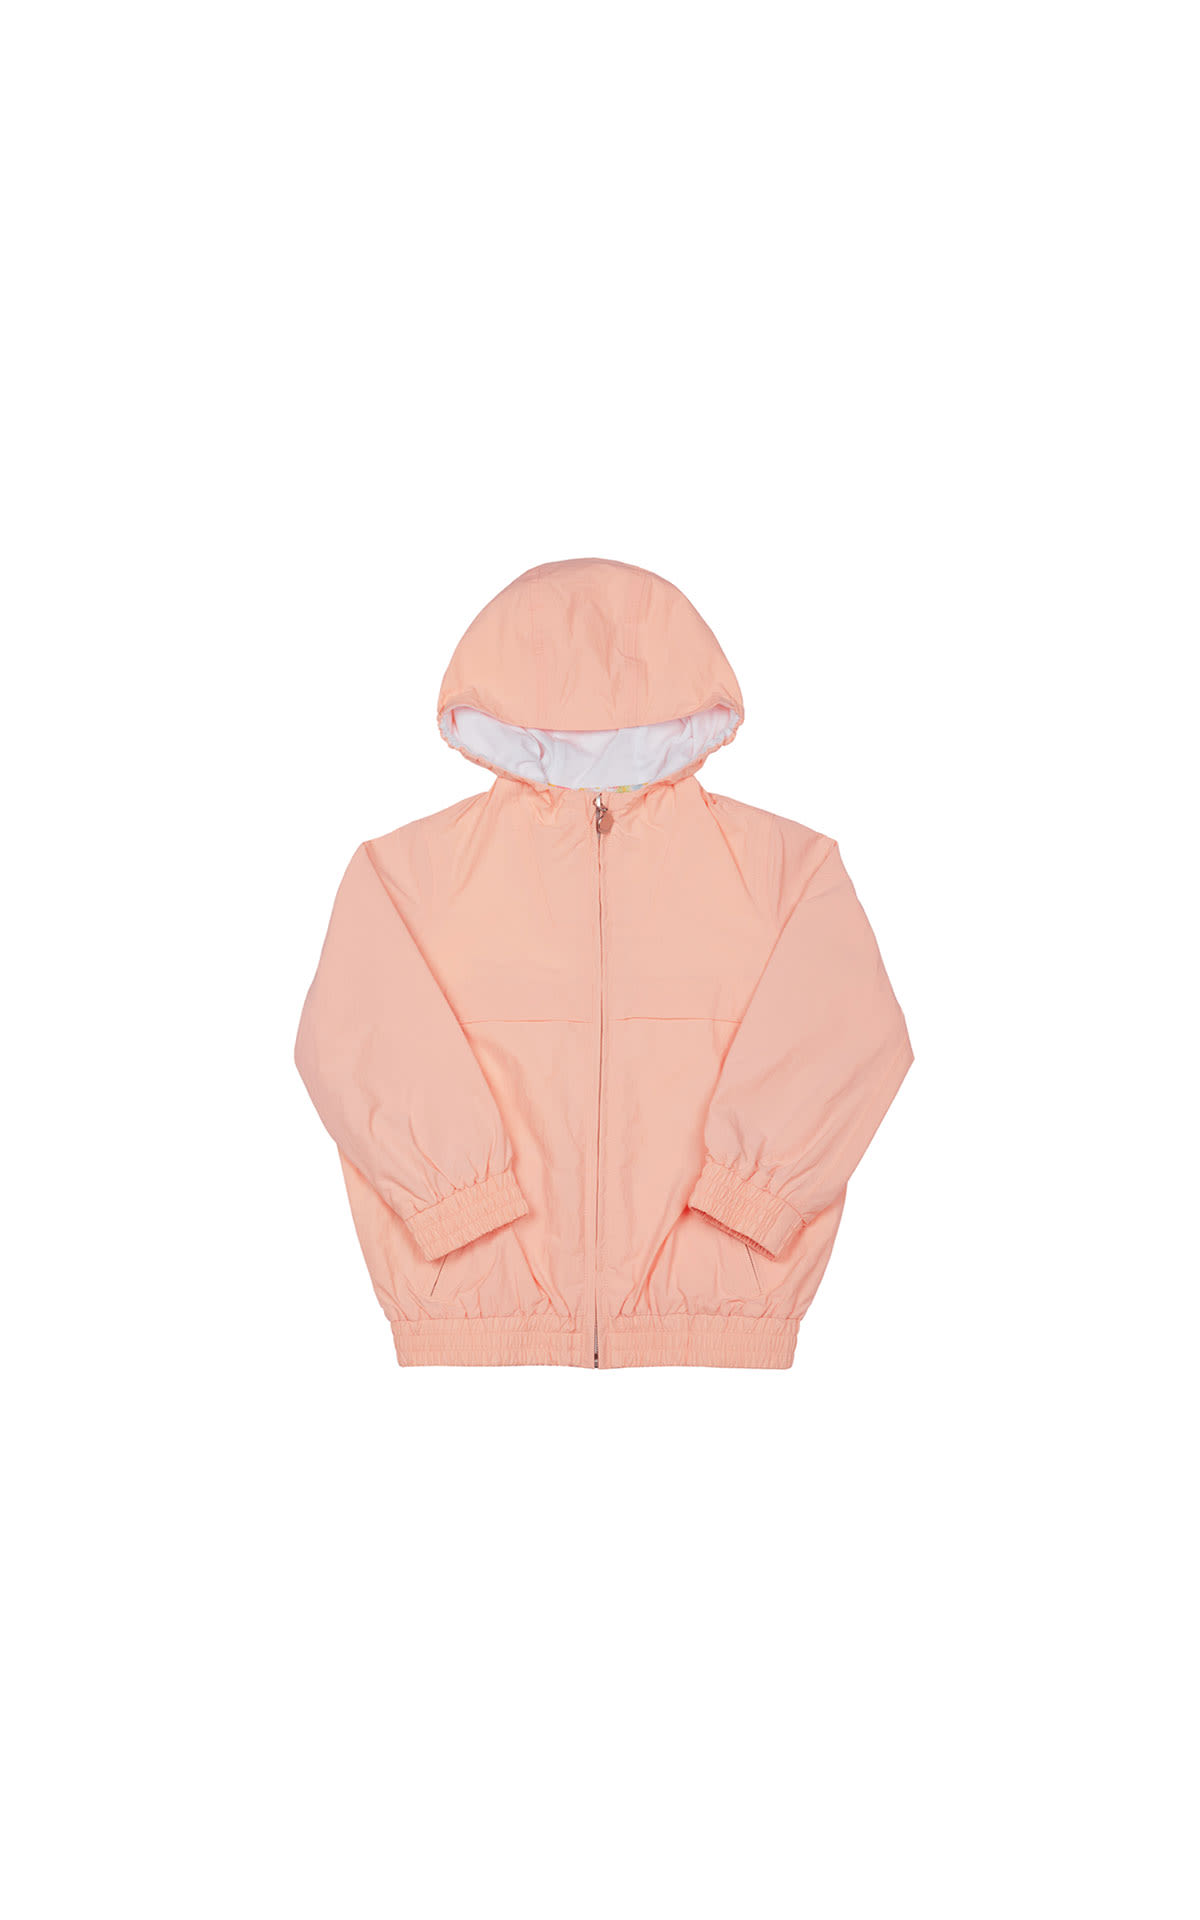 Bonpoint Light pink jacket from Bicester Village